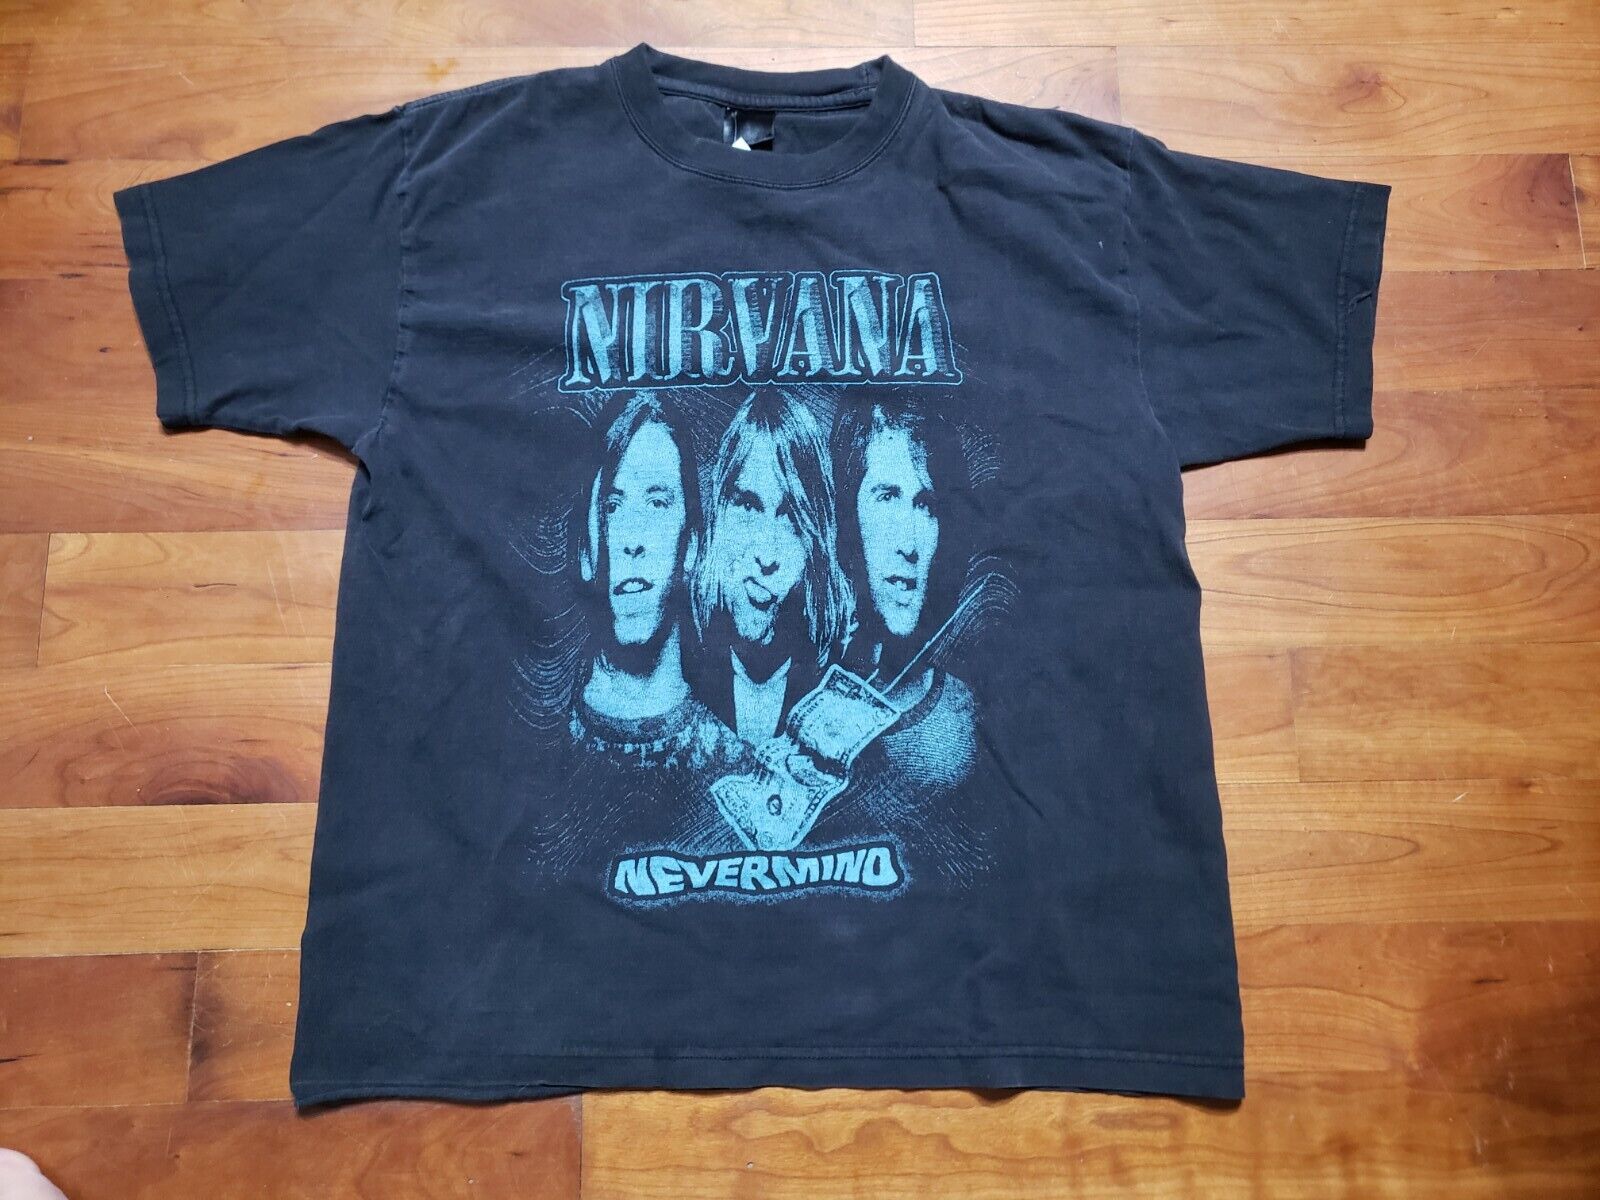 Vintage 1990s Nirvana Grunge Band T-shirt Rare